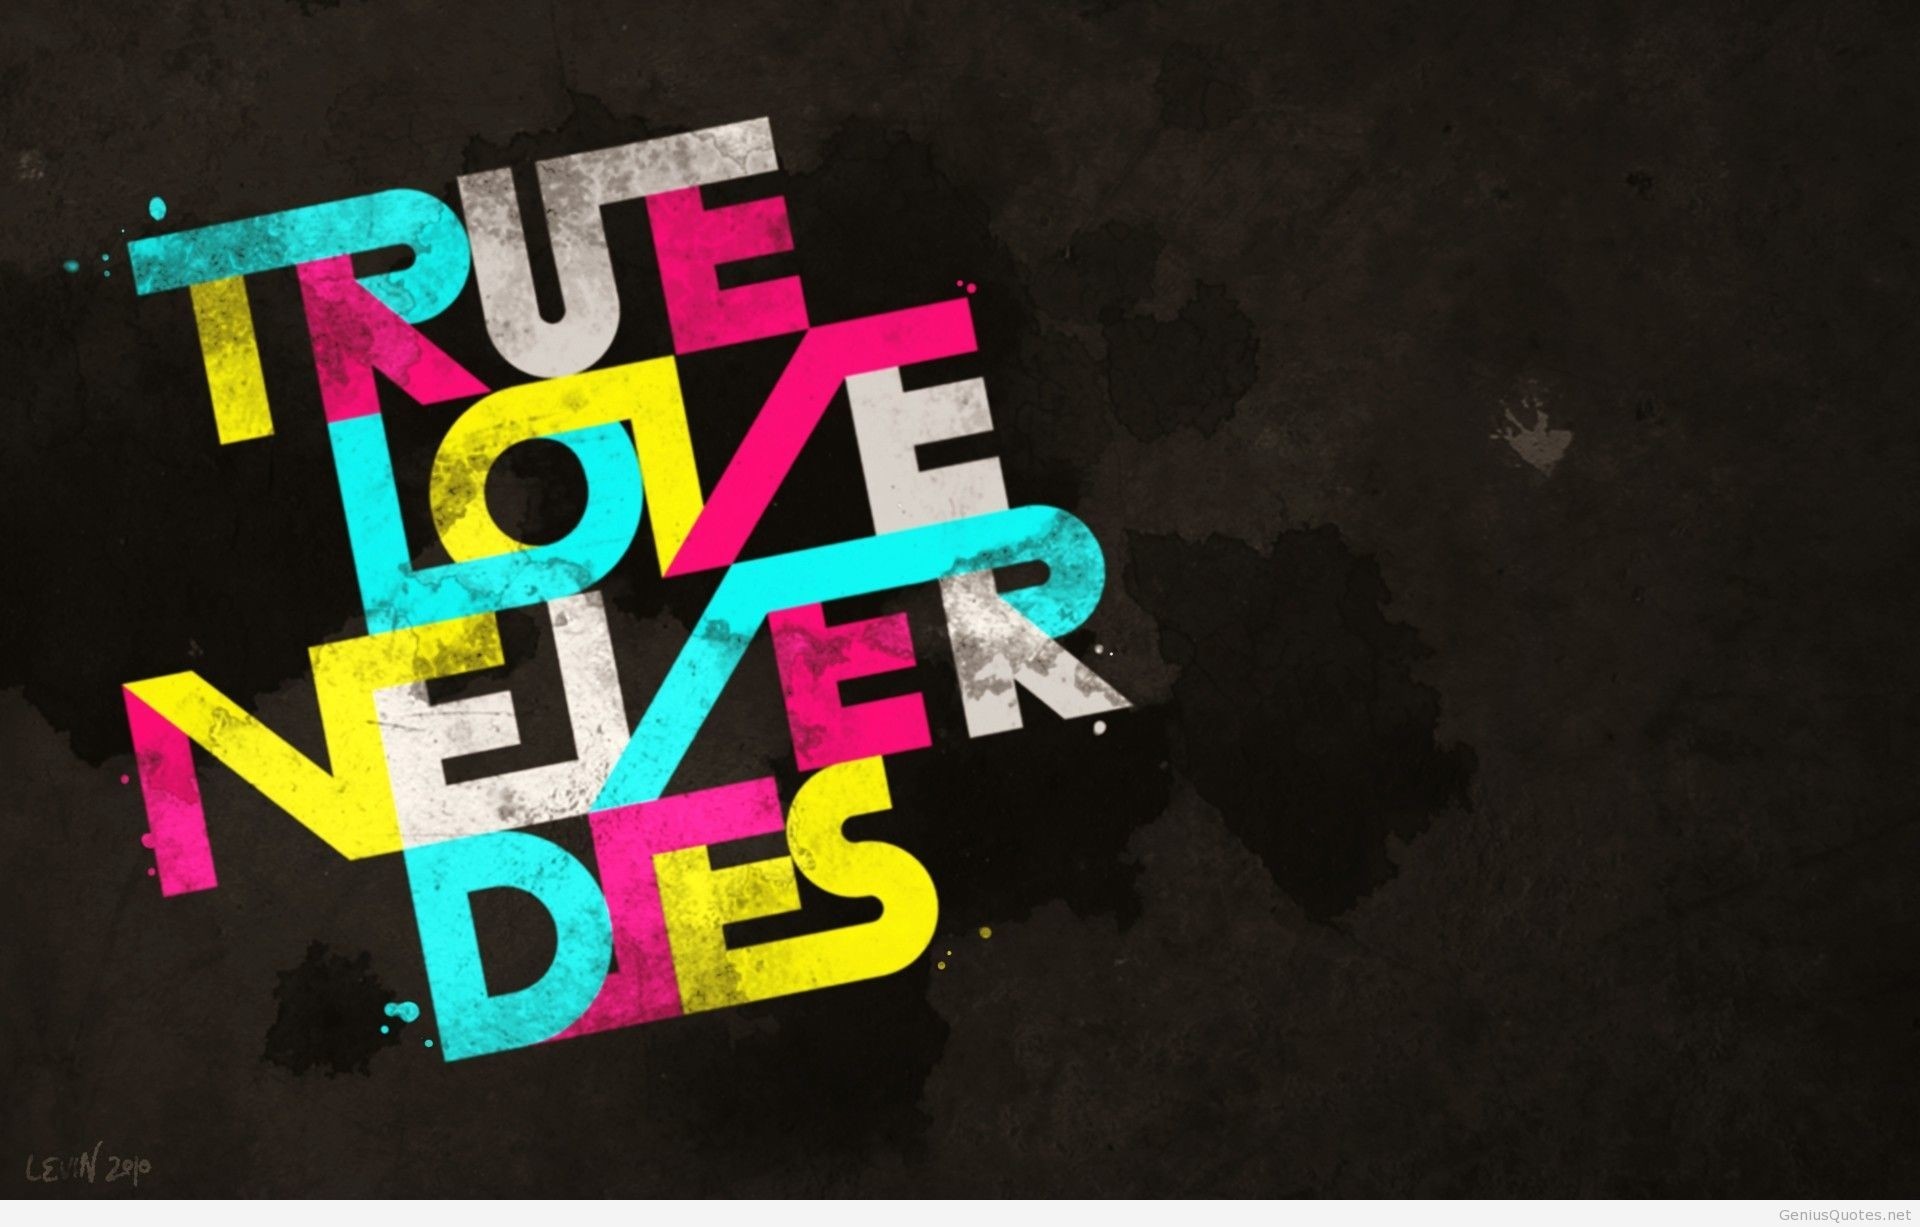 1920x1227 Download Wallpaper of true love hd HD - Wallpaper of true love hd Download  Download Wallpaper